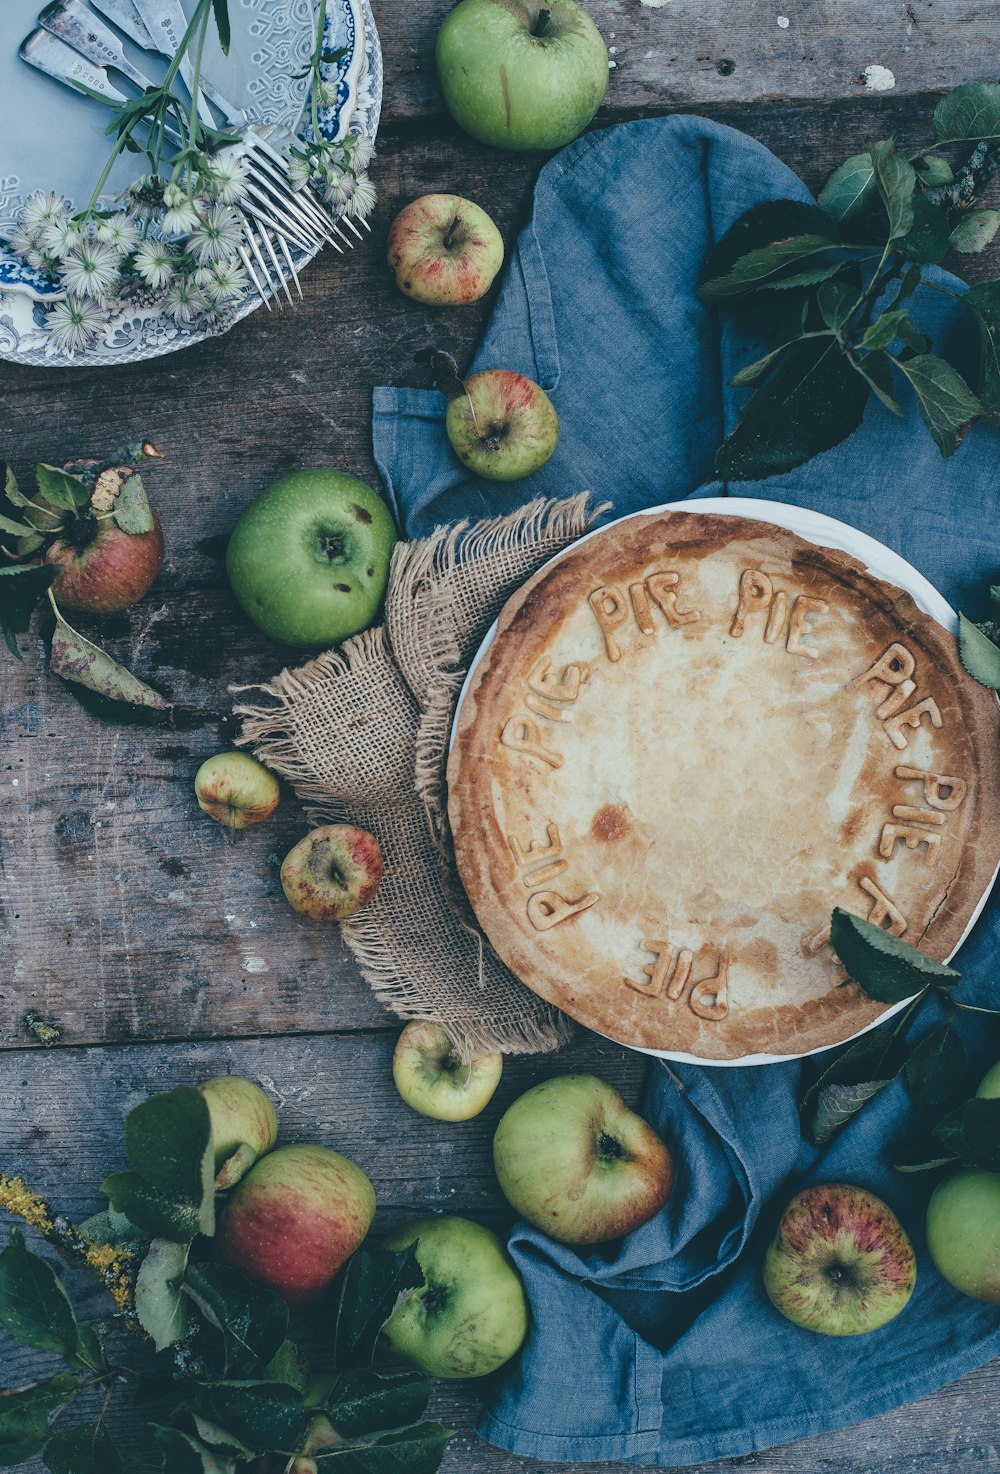 baked pie beside green apples